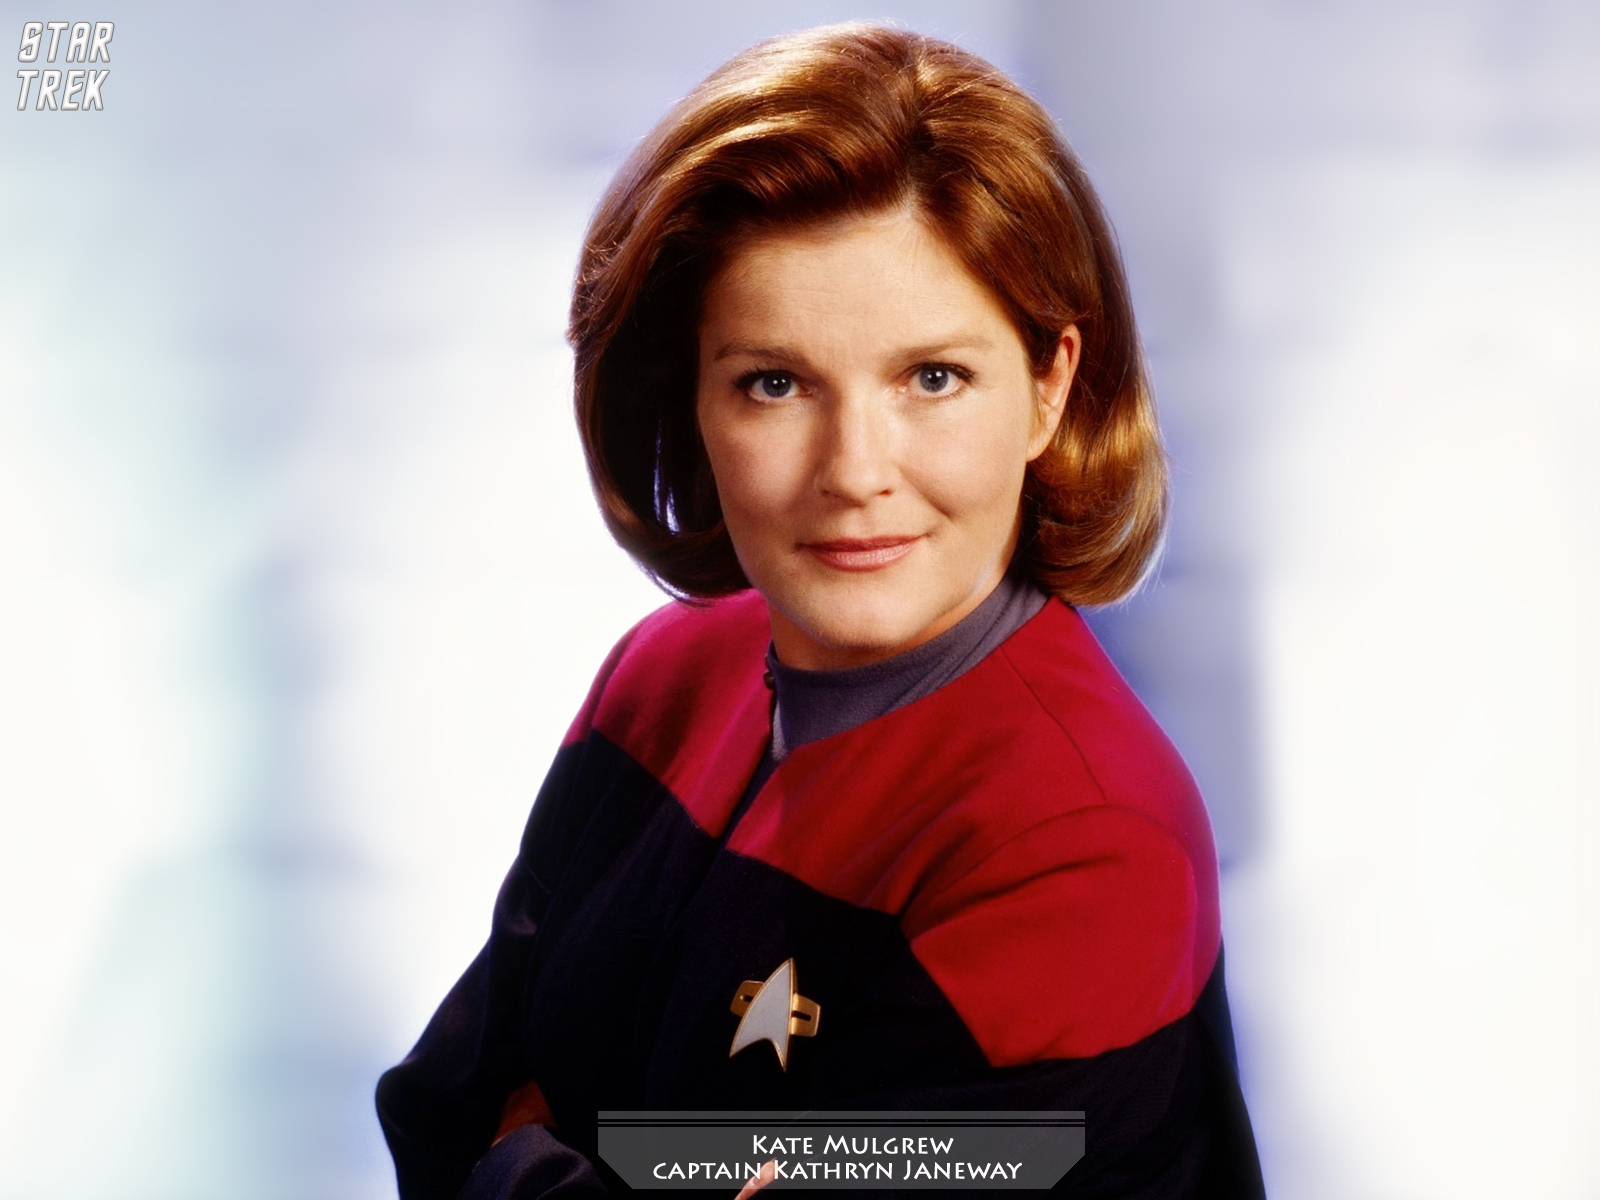 - Star Trek USS Voyager Captain Kathryn Janeway - free Star Trek computer desktop wallpaper, pictures, images.